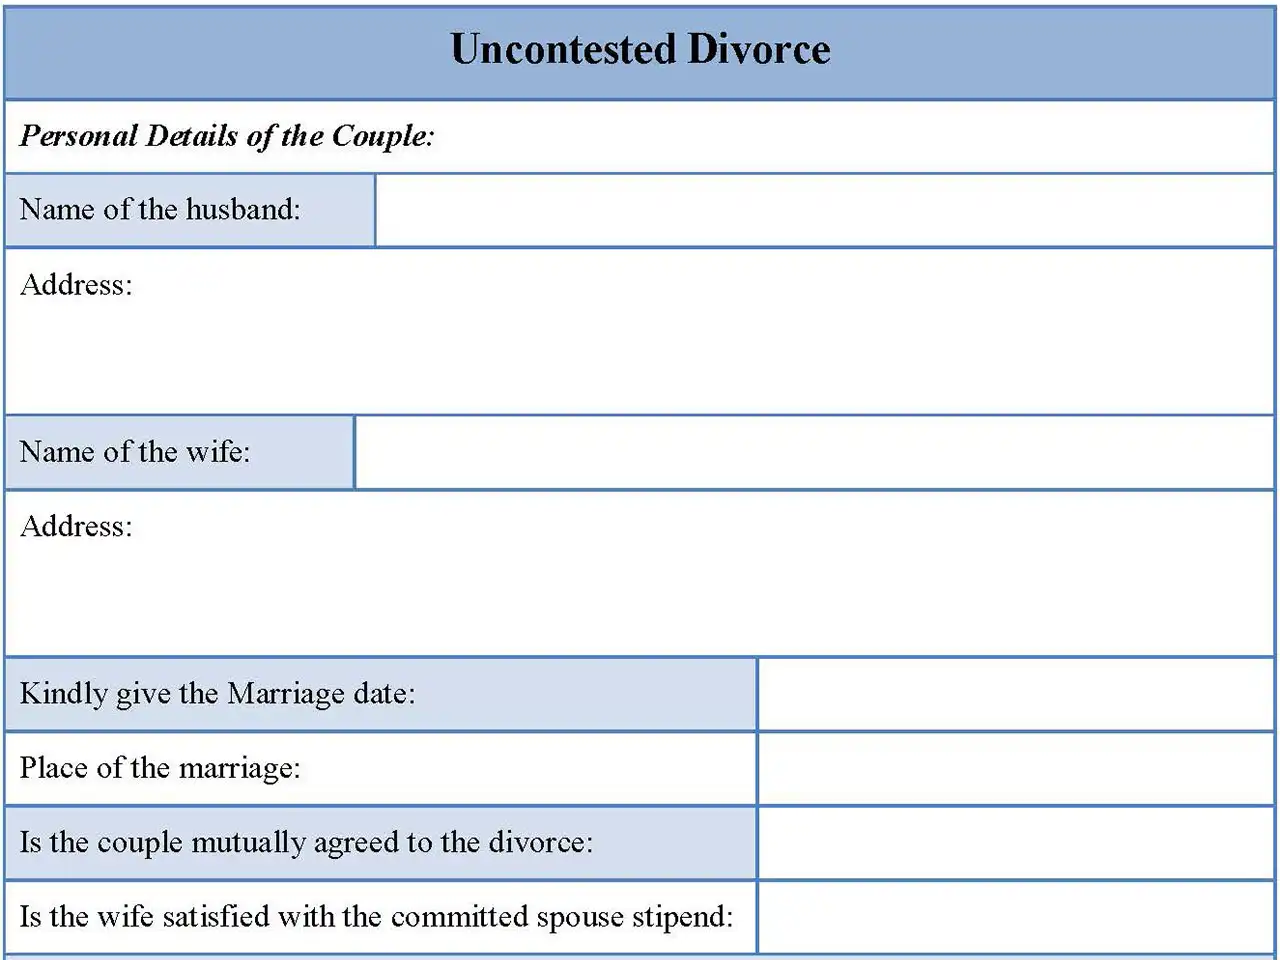 Uncontested divorce form